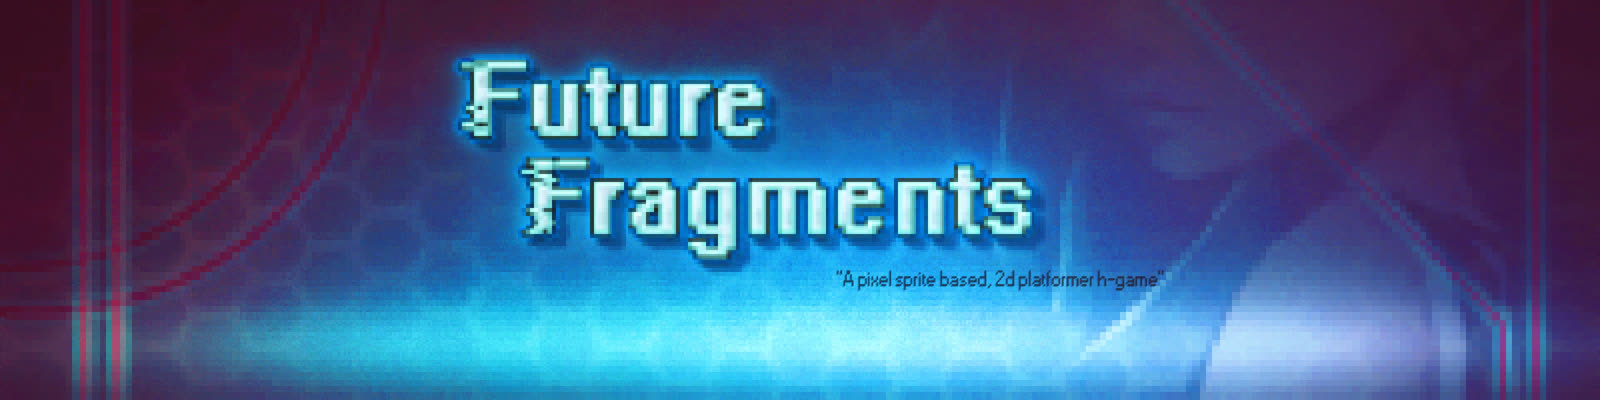 future fragments latest demo